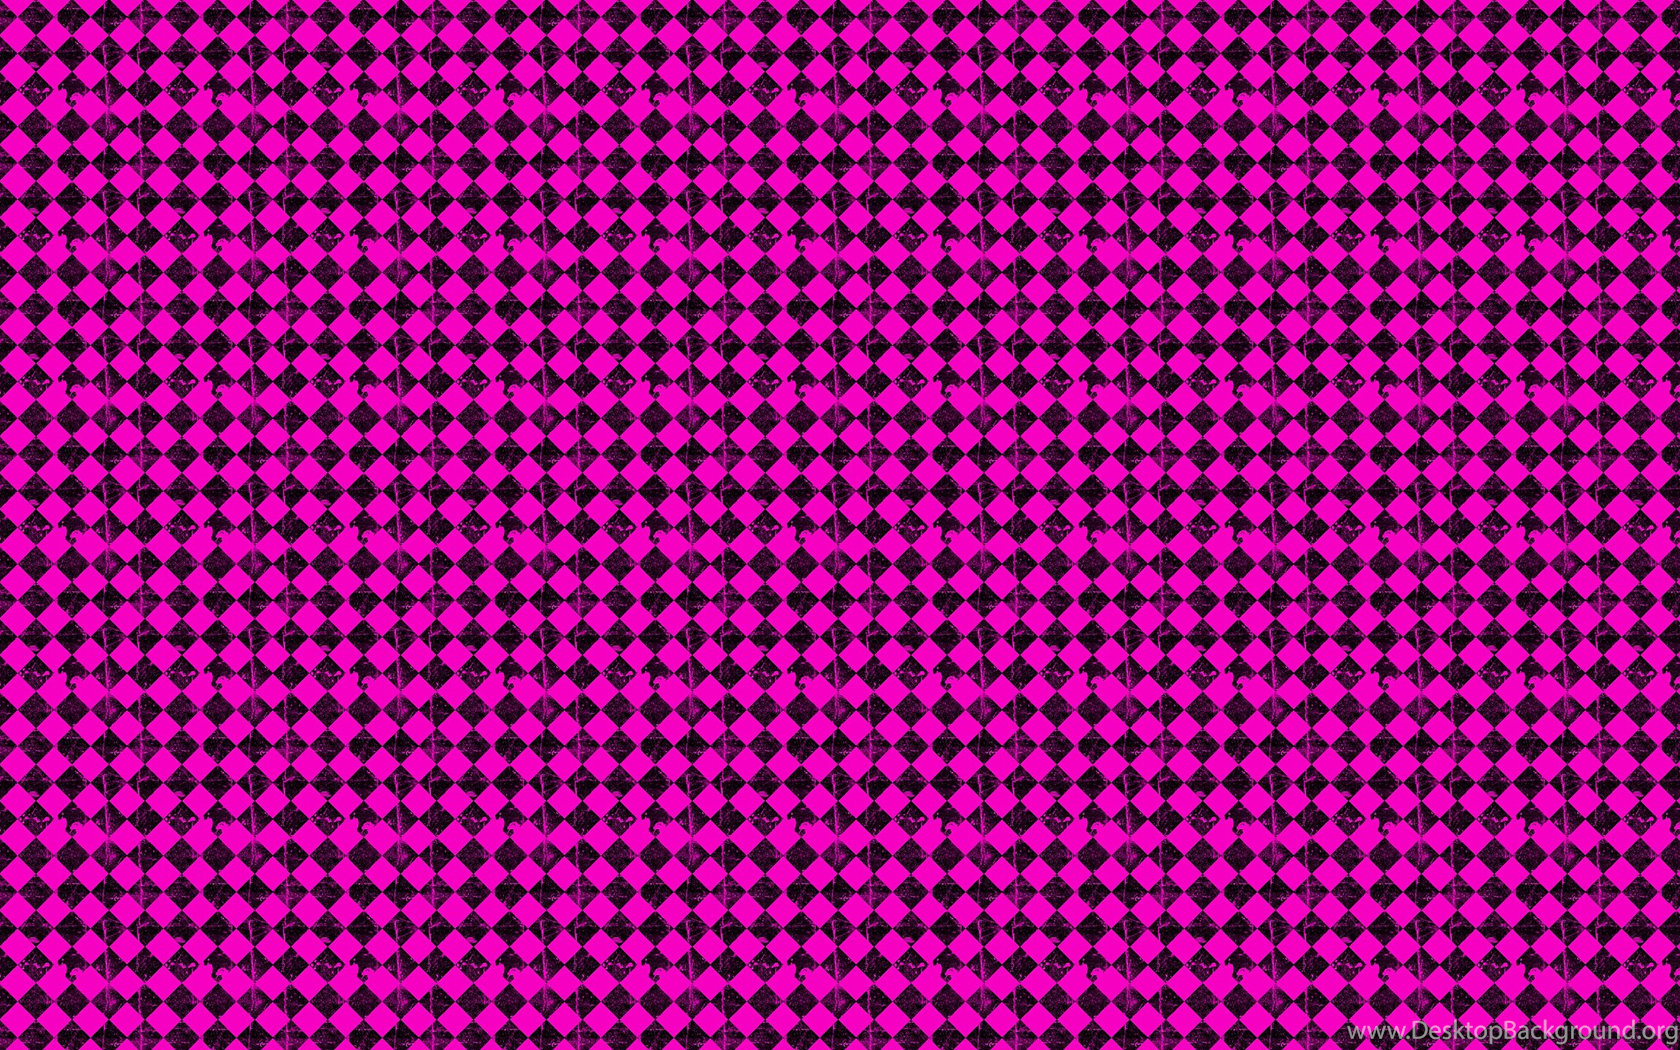 Download Hot Pink Grunge Checkers Desktop Wallpapers Popular 1680x1050 Desk...